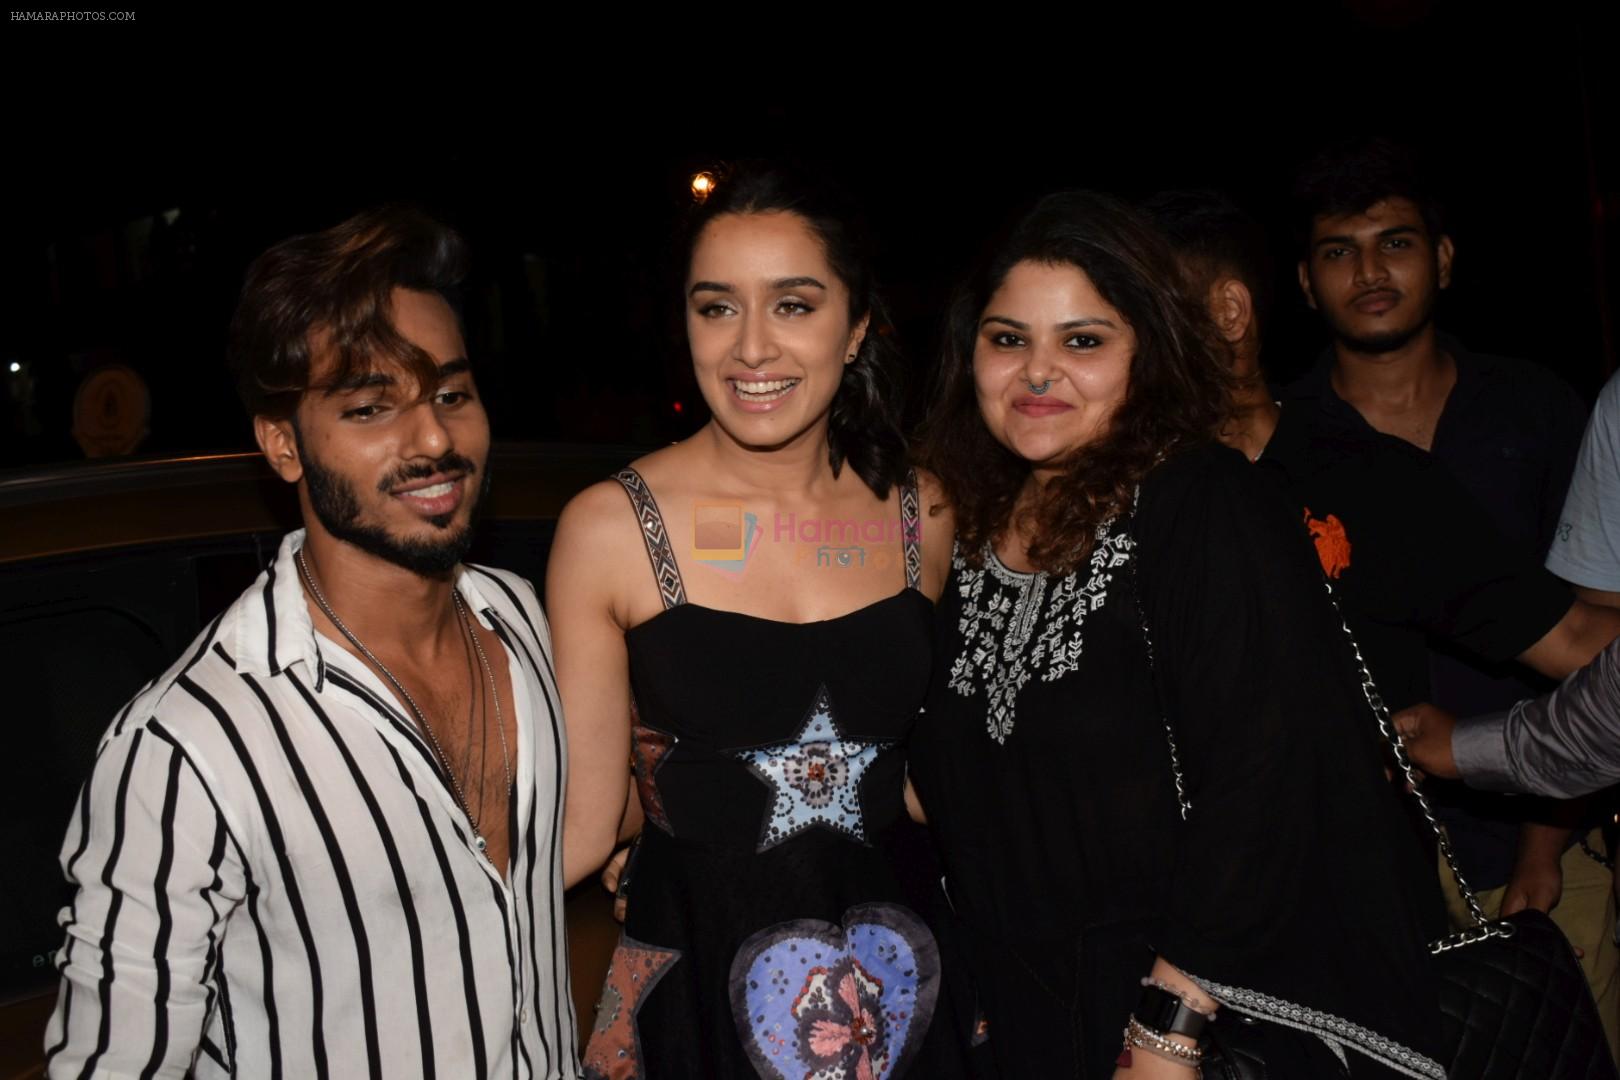 Shraddha Kapoor at Wrapup party of film Stree at Bastian in bandra on 16th May 2018